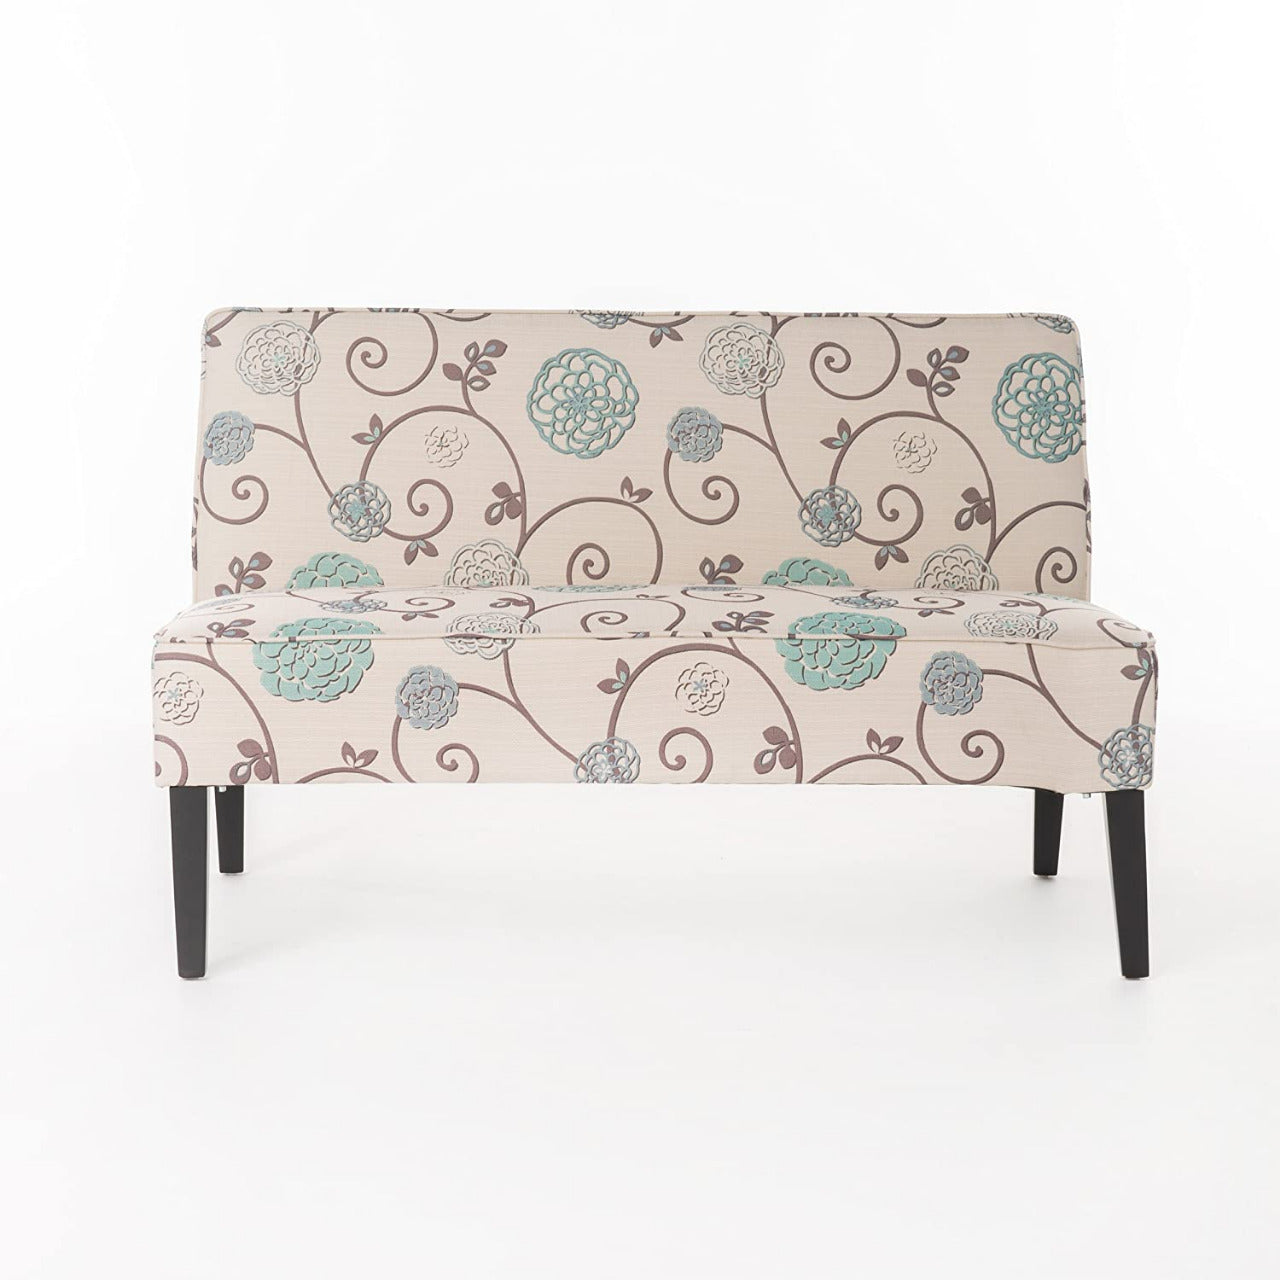 2 Seater Sofa : Fabric Love Seat